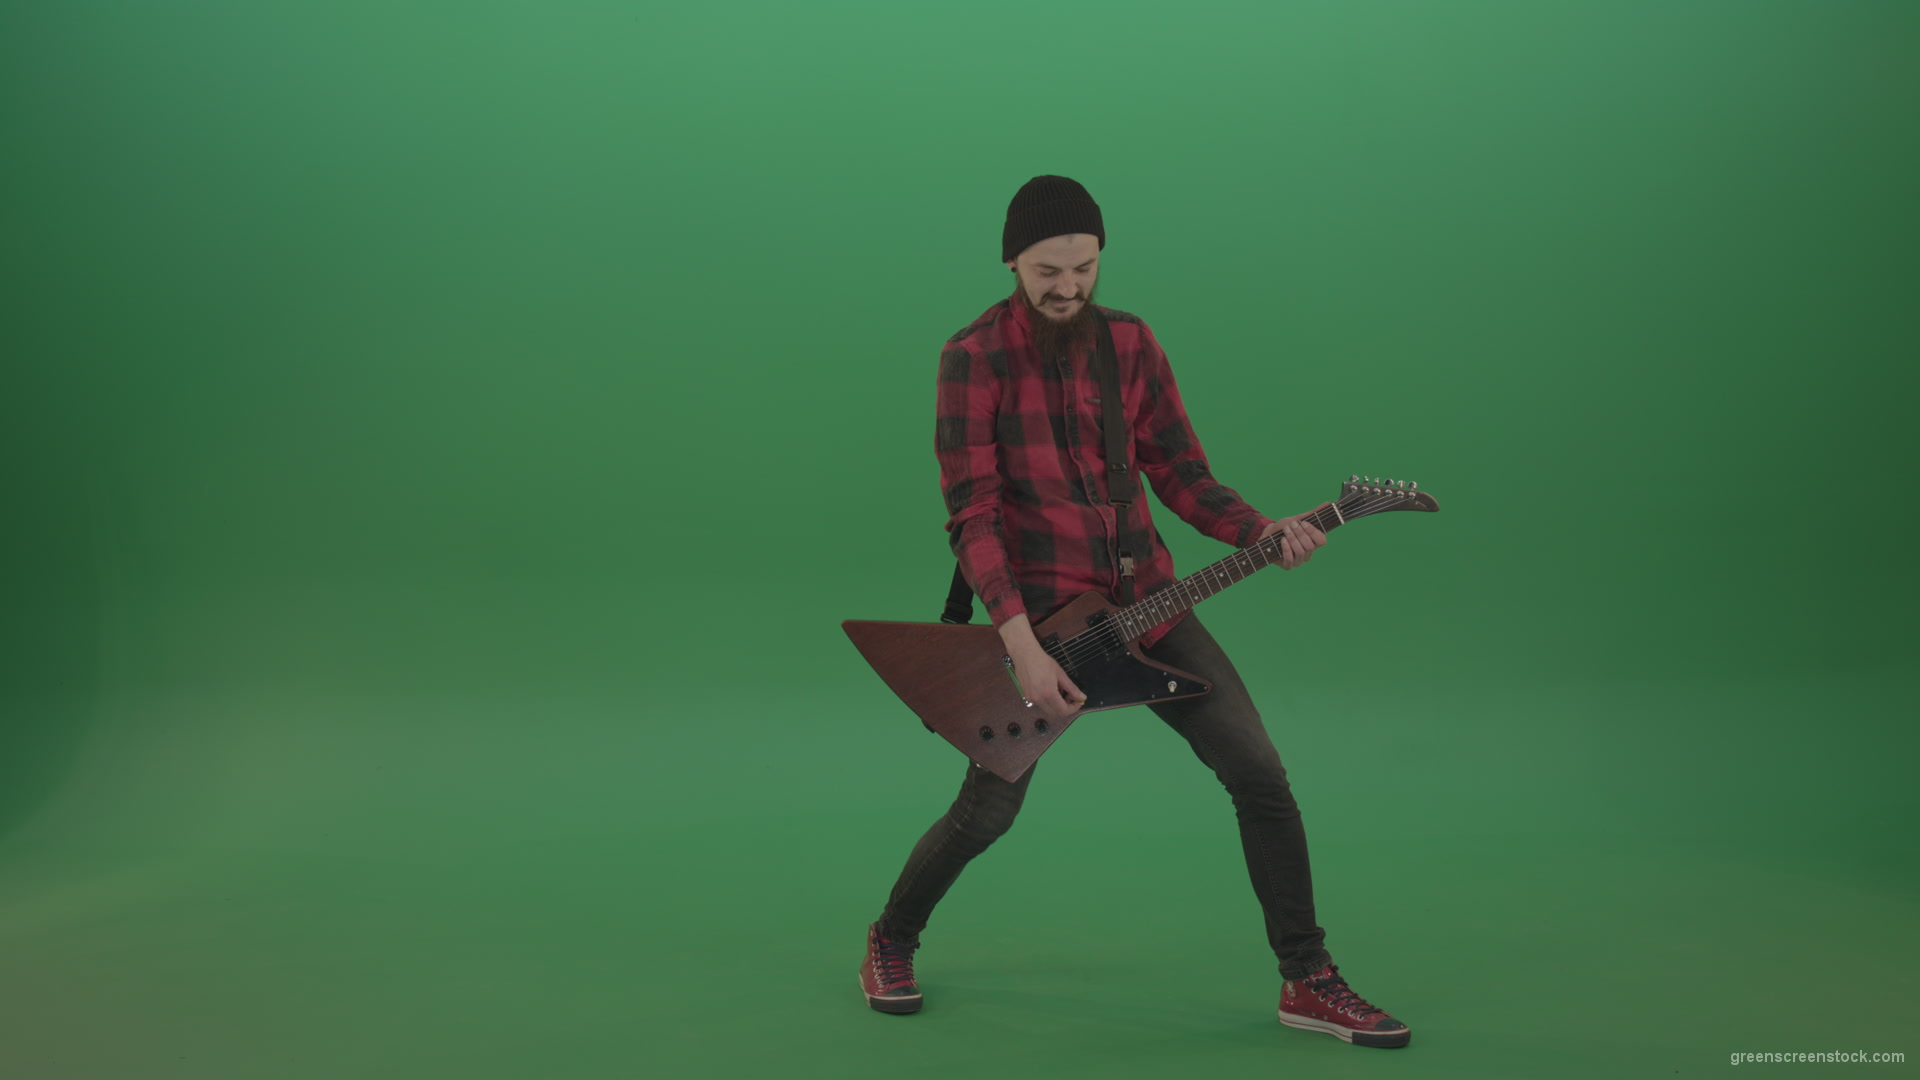 Full-size-Green-Screen-Musician-Rock-Guitarist-man-in-red-shirt-play-guitar-on-green-screen_001 Green Screen Stock